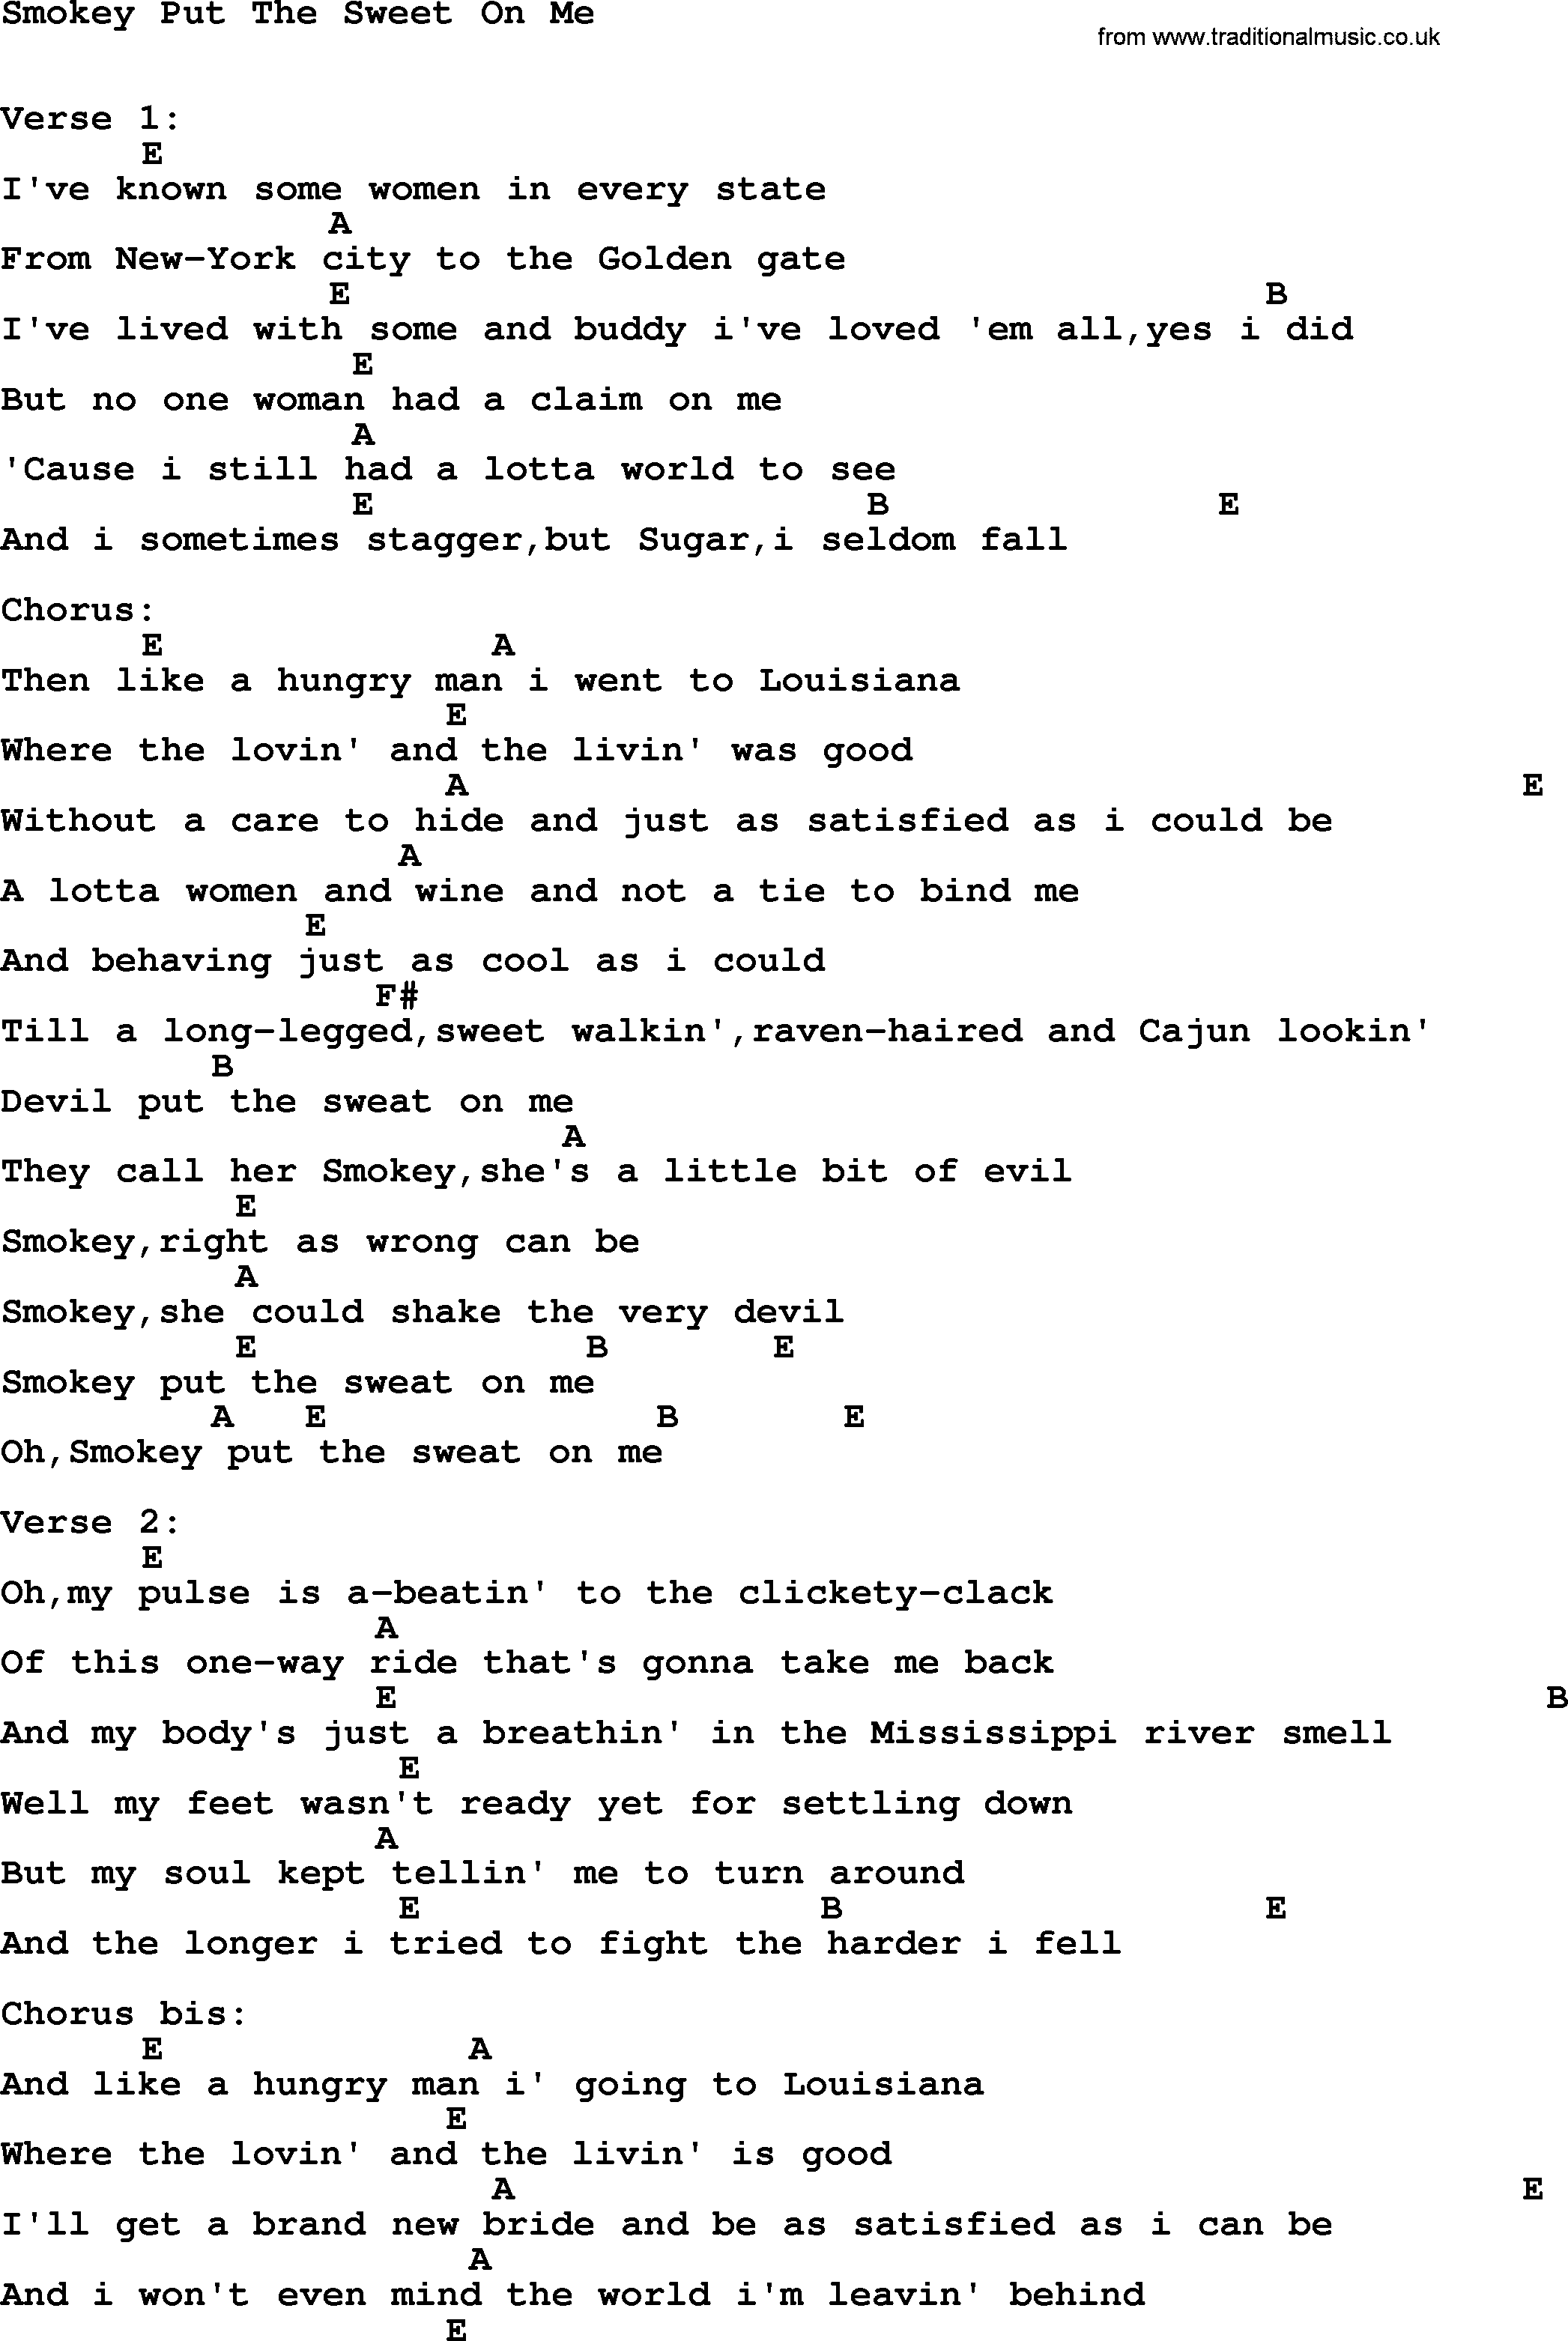 Kris Kristofferson song: Smokey Put The Sweet On Me lyrics and chords